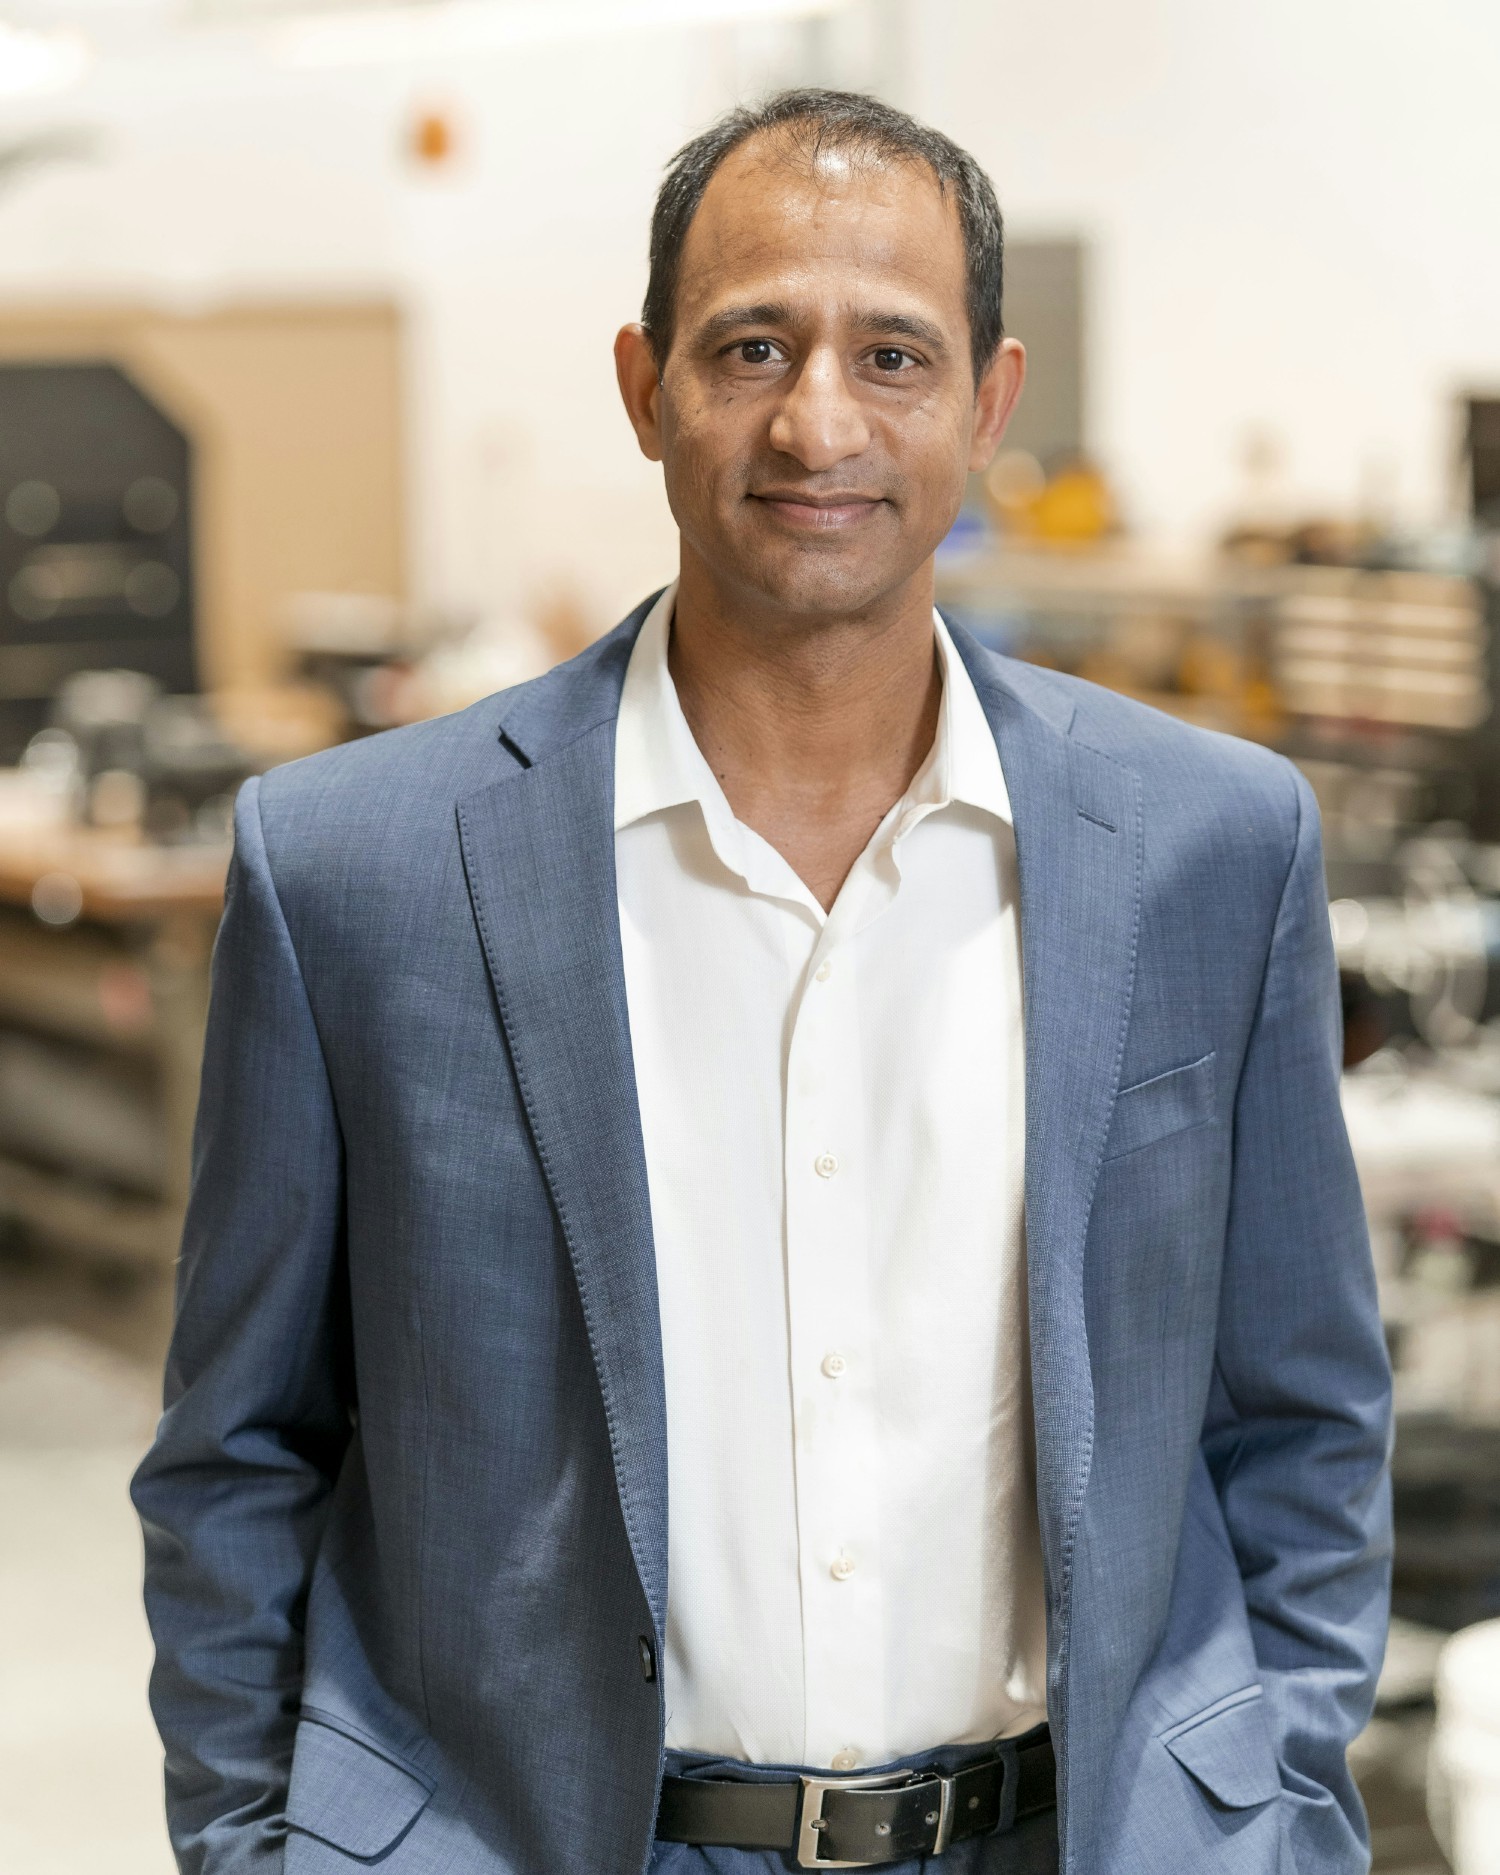 Aeroseal CEO, Amit Gupta